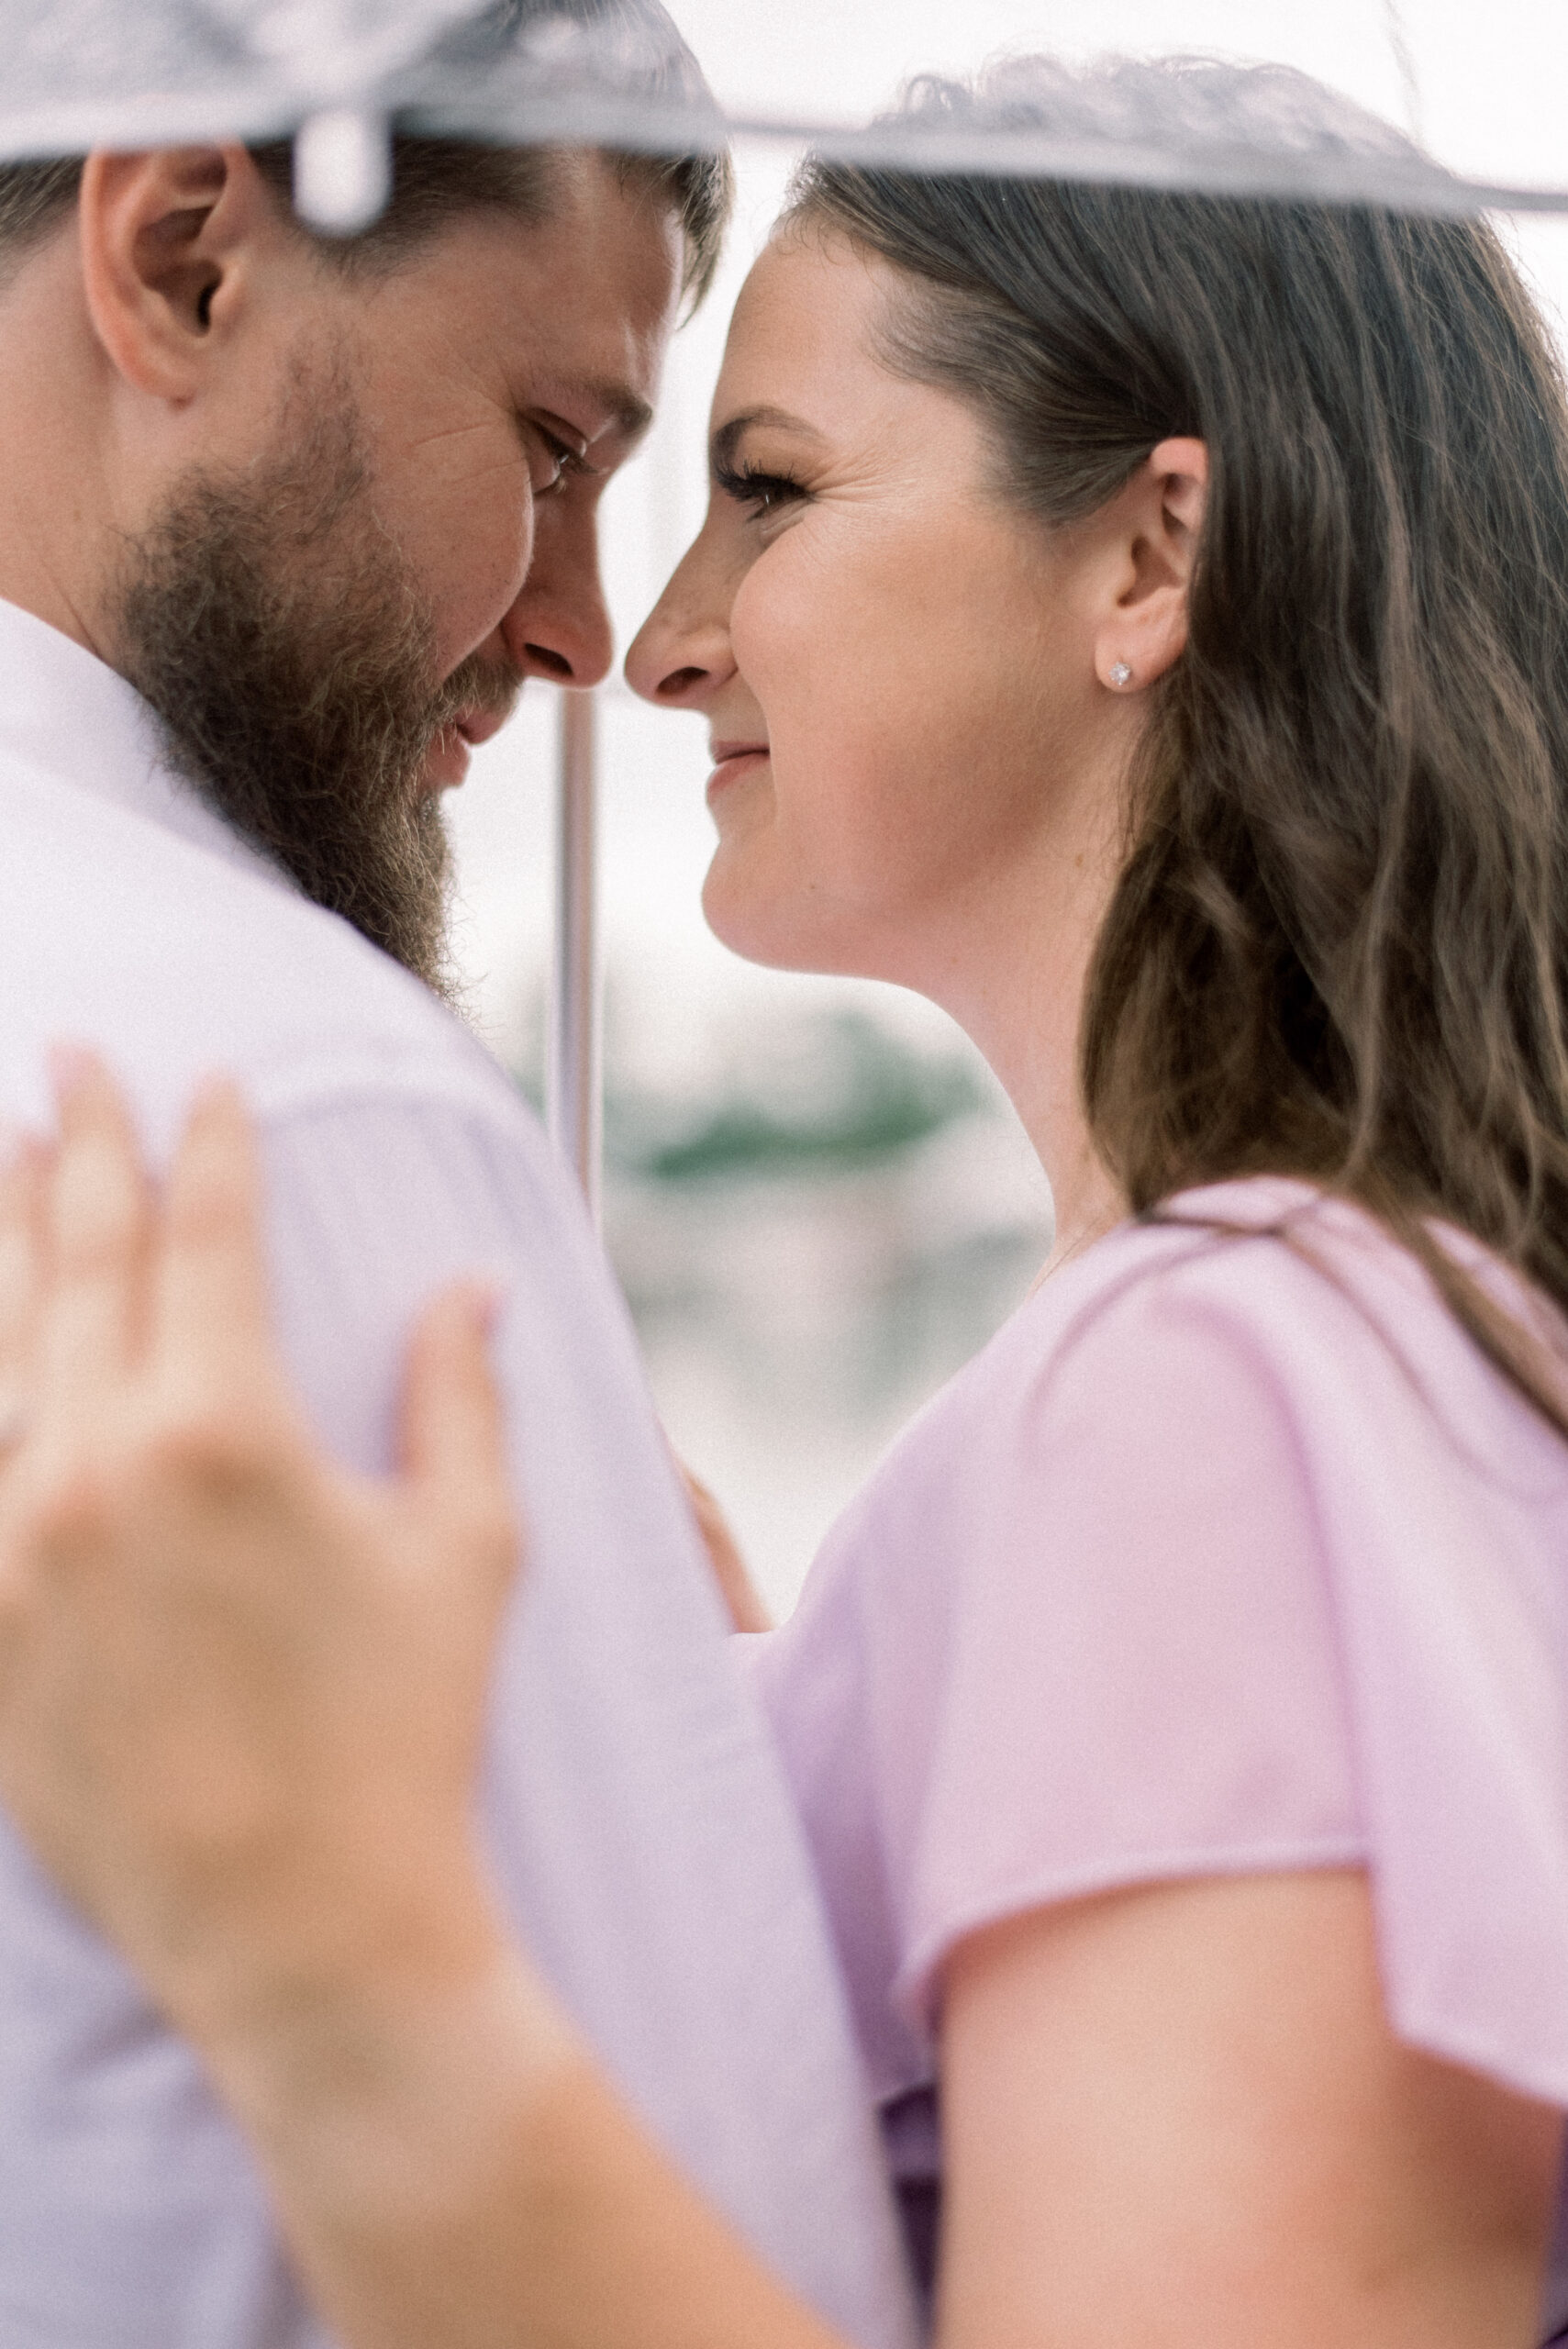 Pennsylvania wedding photographer captures couple touching noses